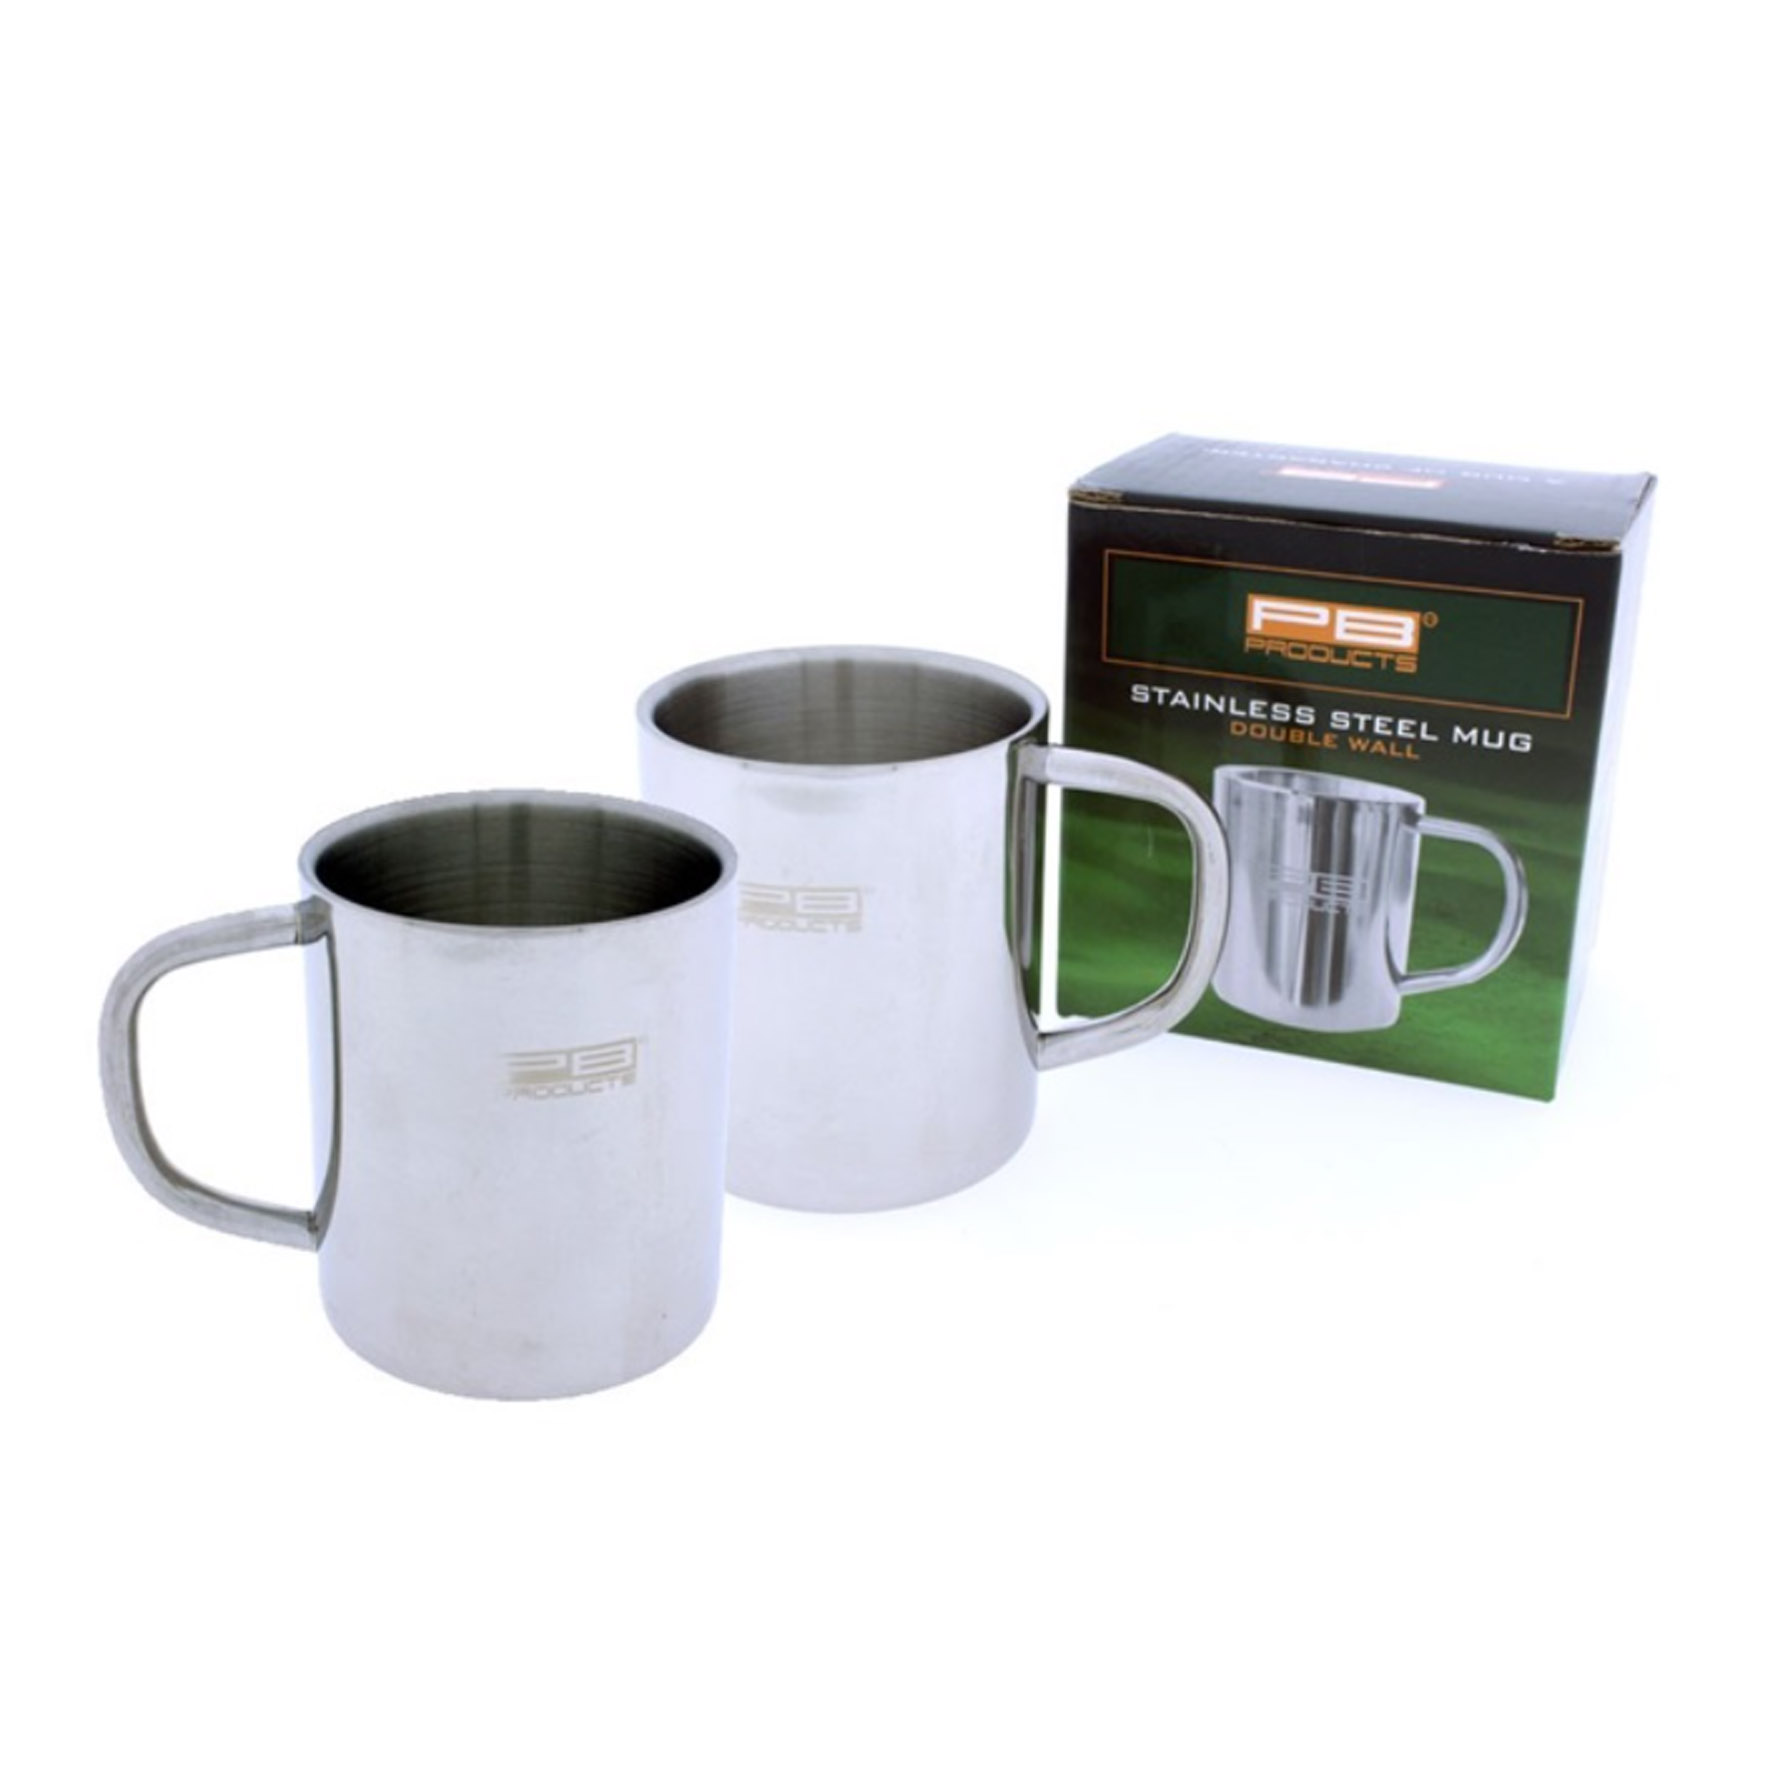 PB Products Stainless Steel Mug 300ml